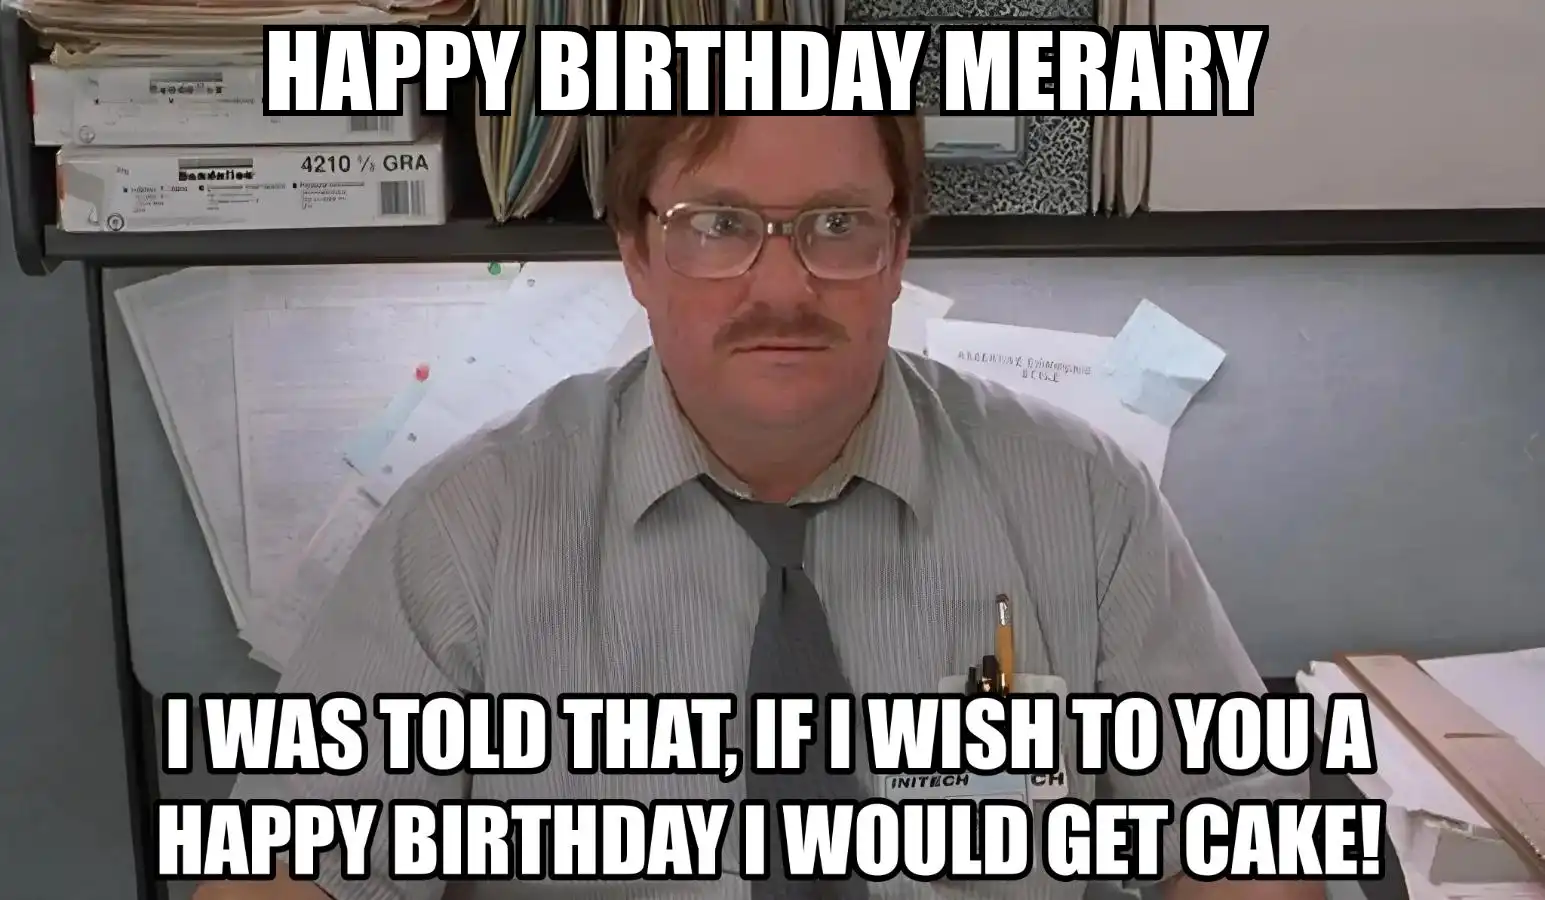 Happy Birthday Merary I Would Get A Cake Meme